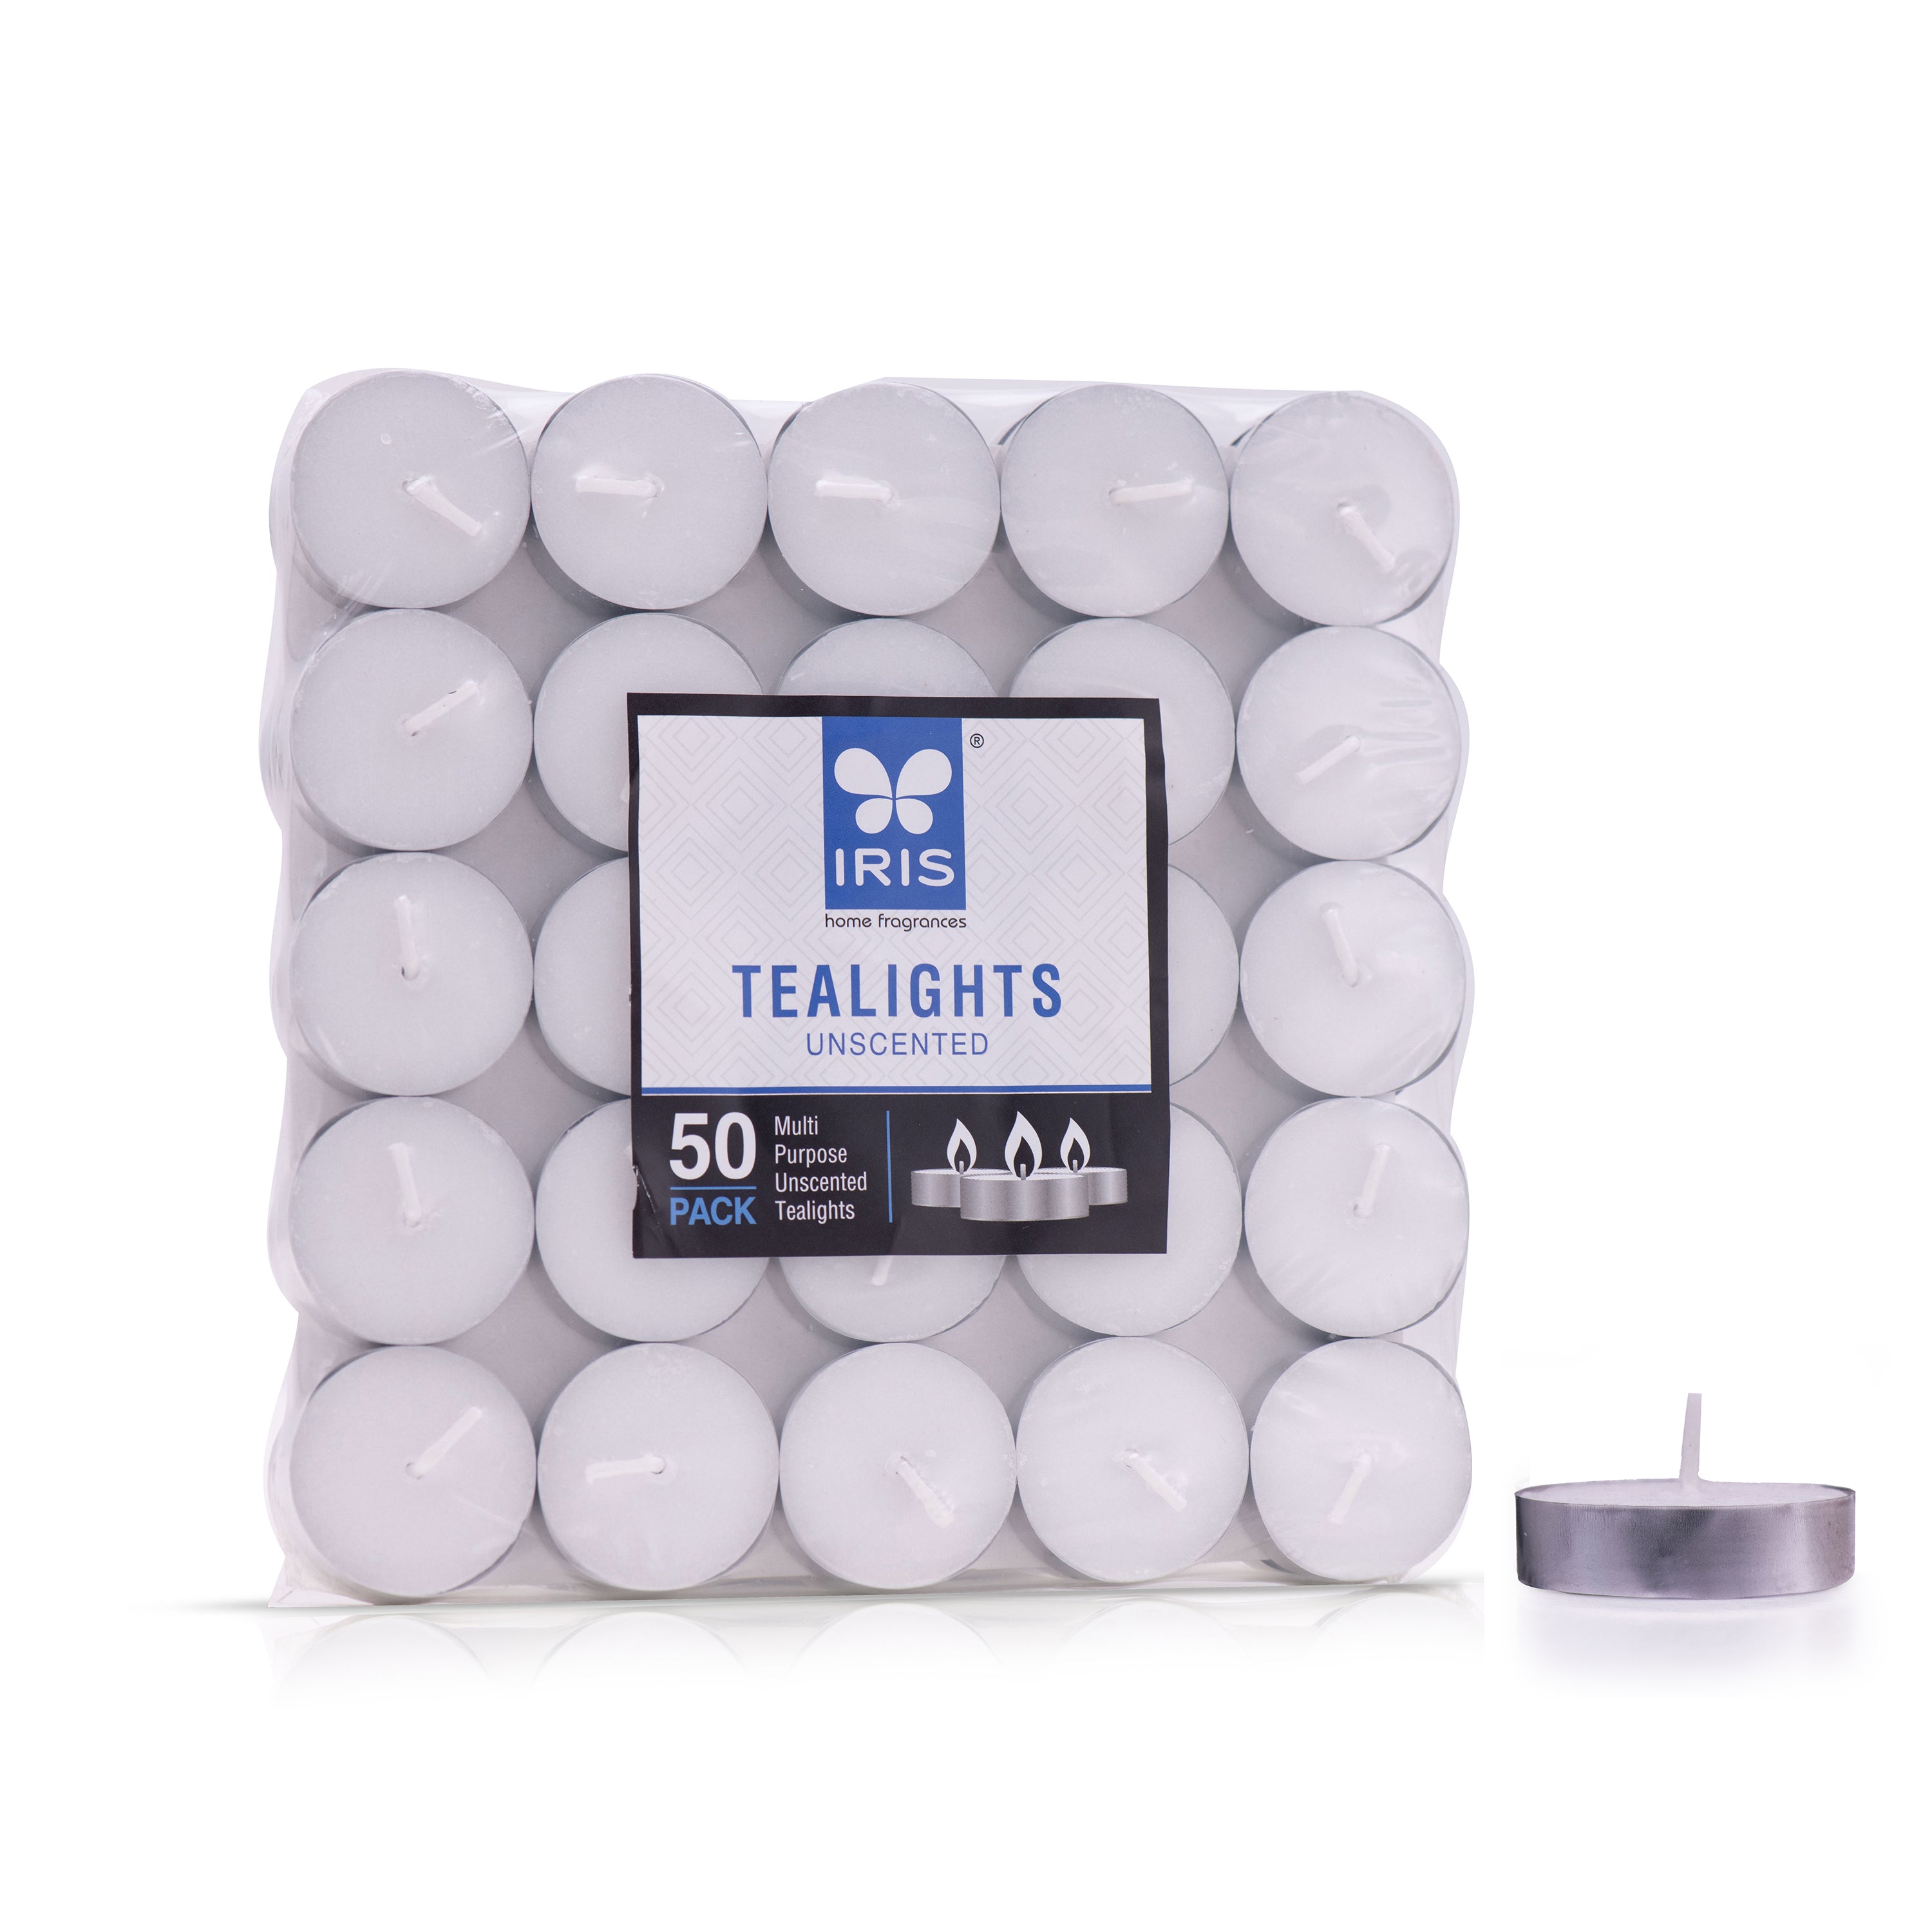 IRIS Pack of 50 Unscented Tea lights